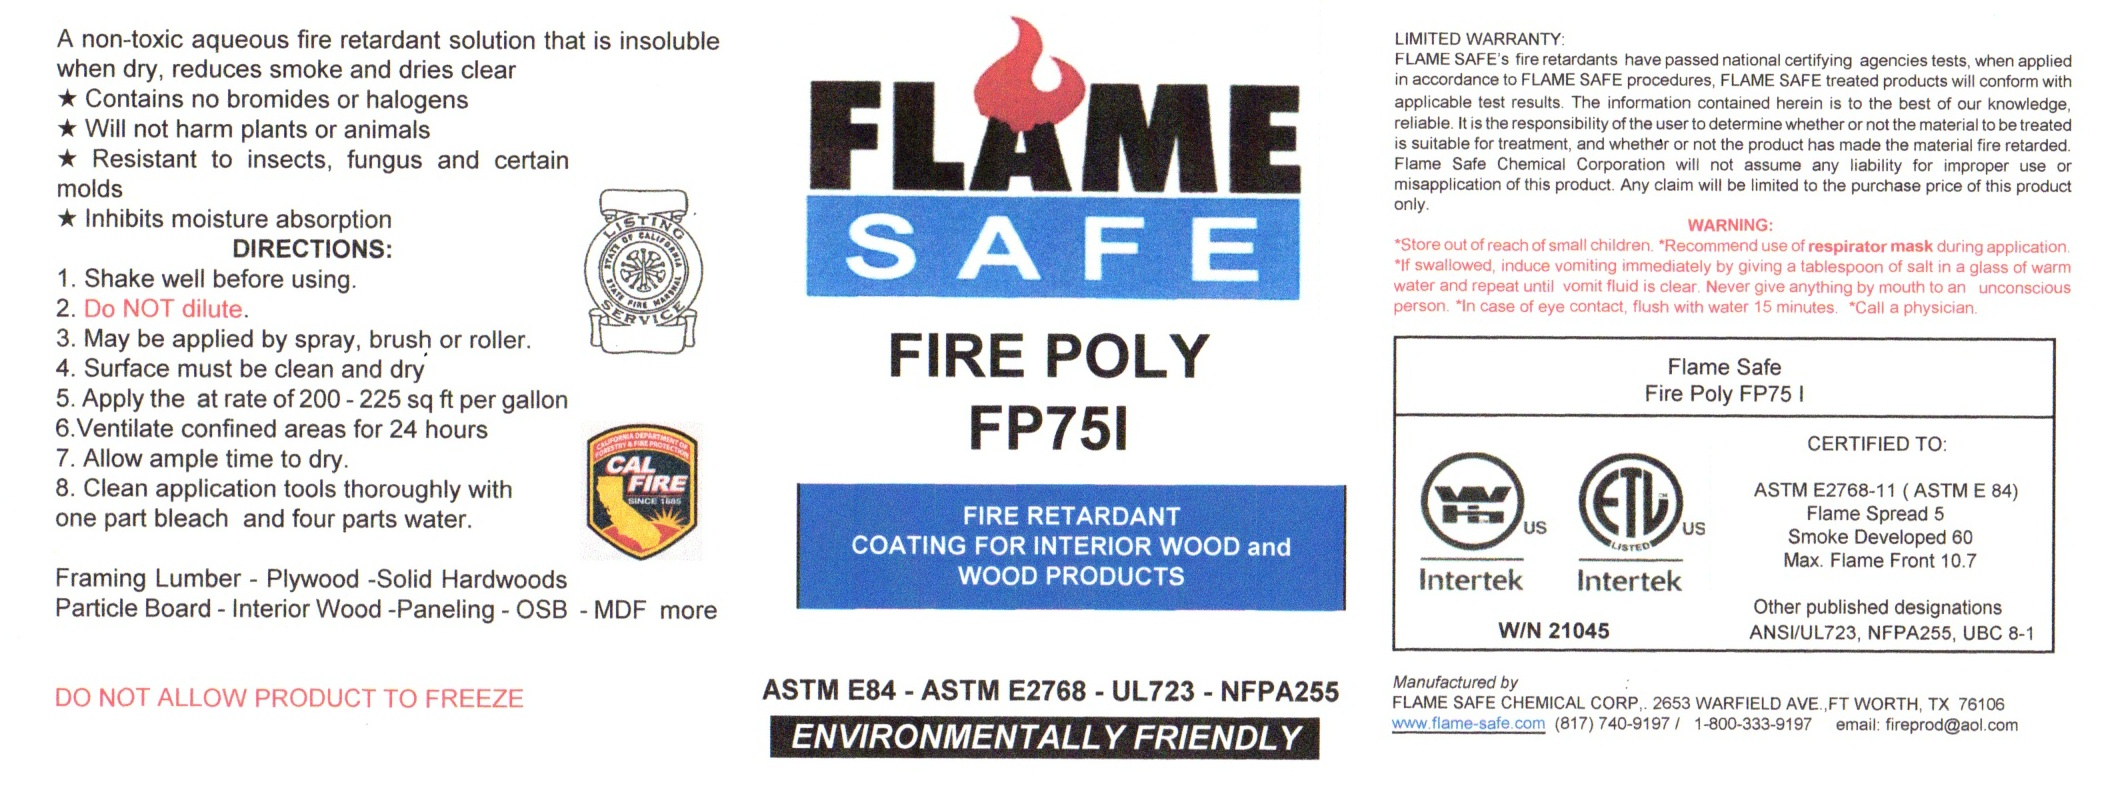 Fire Poly FP75I fire retardant for interior wood